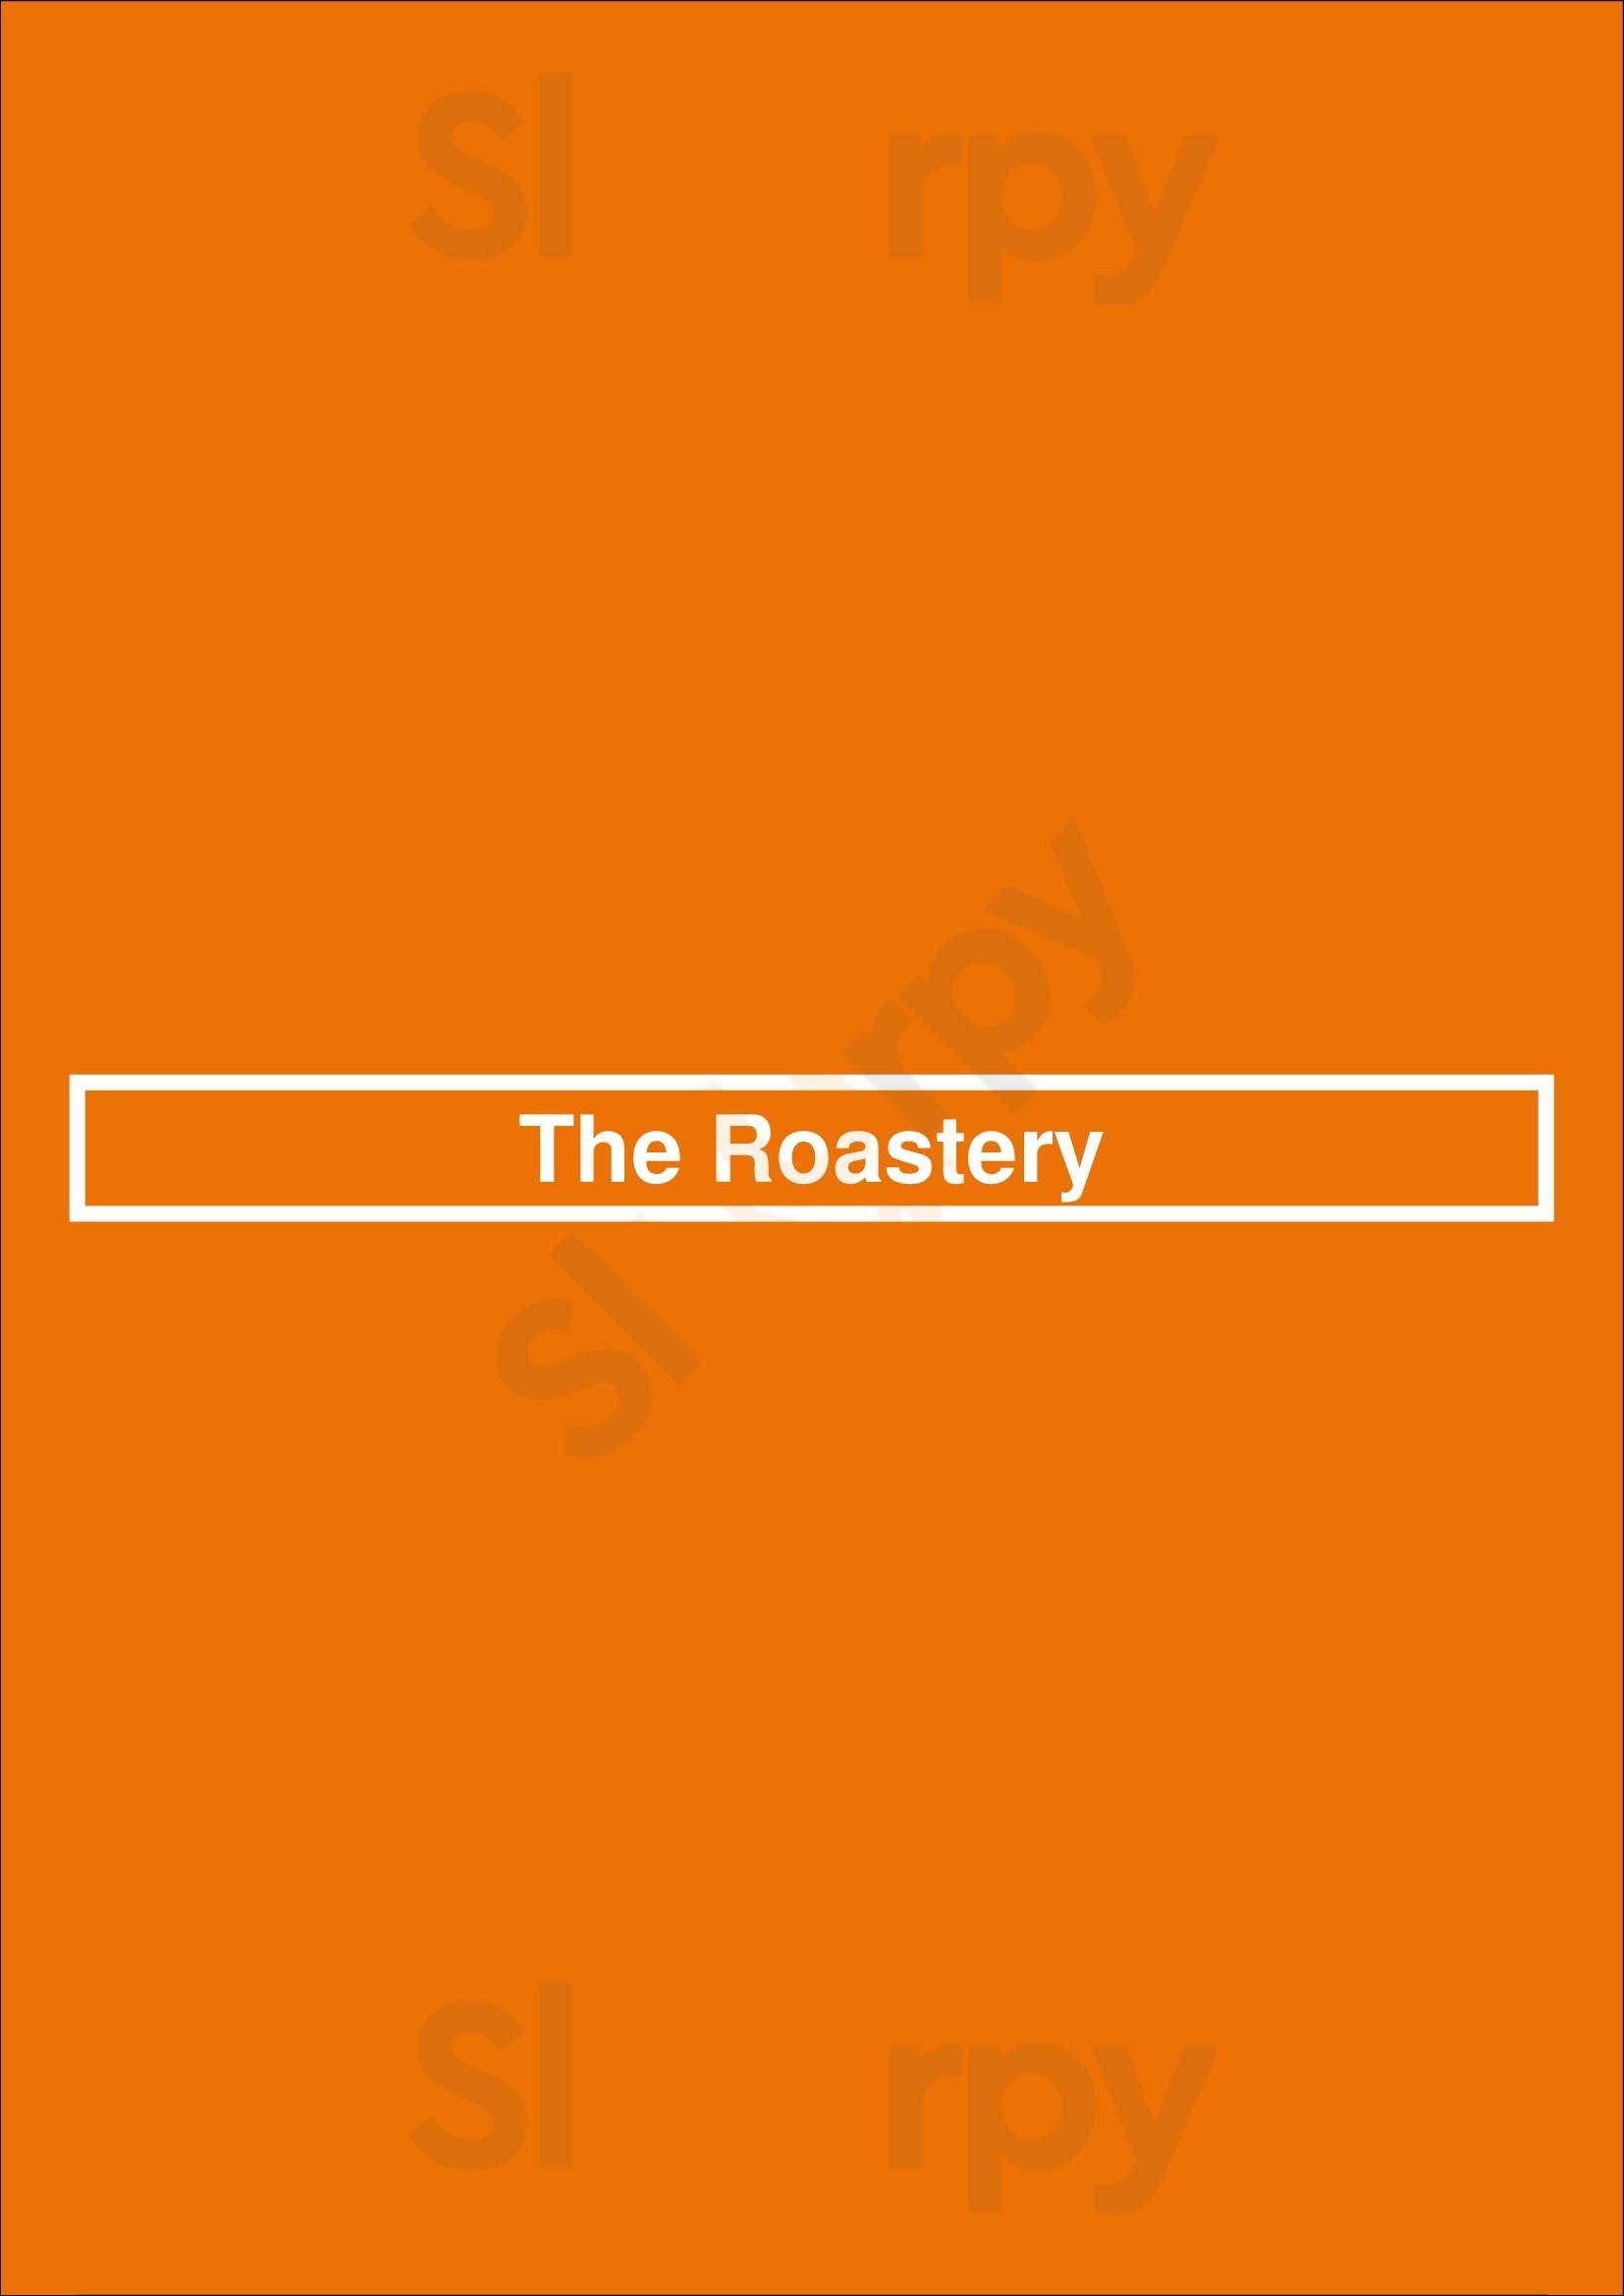 The Roastery Houston Menu - 1